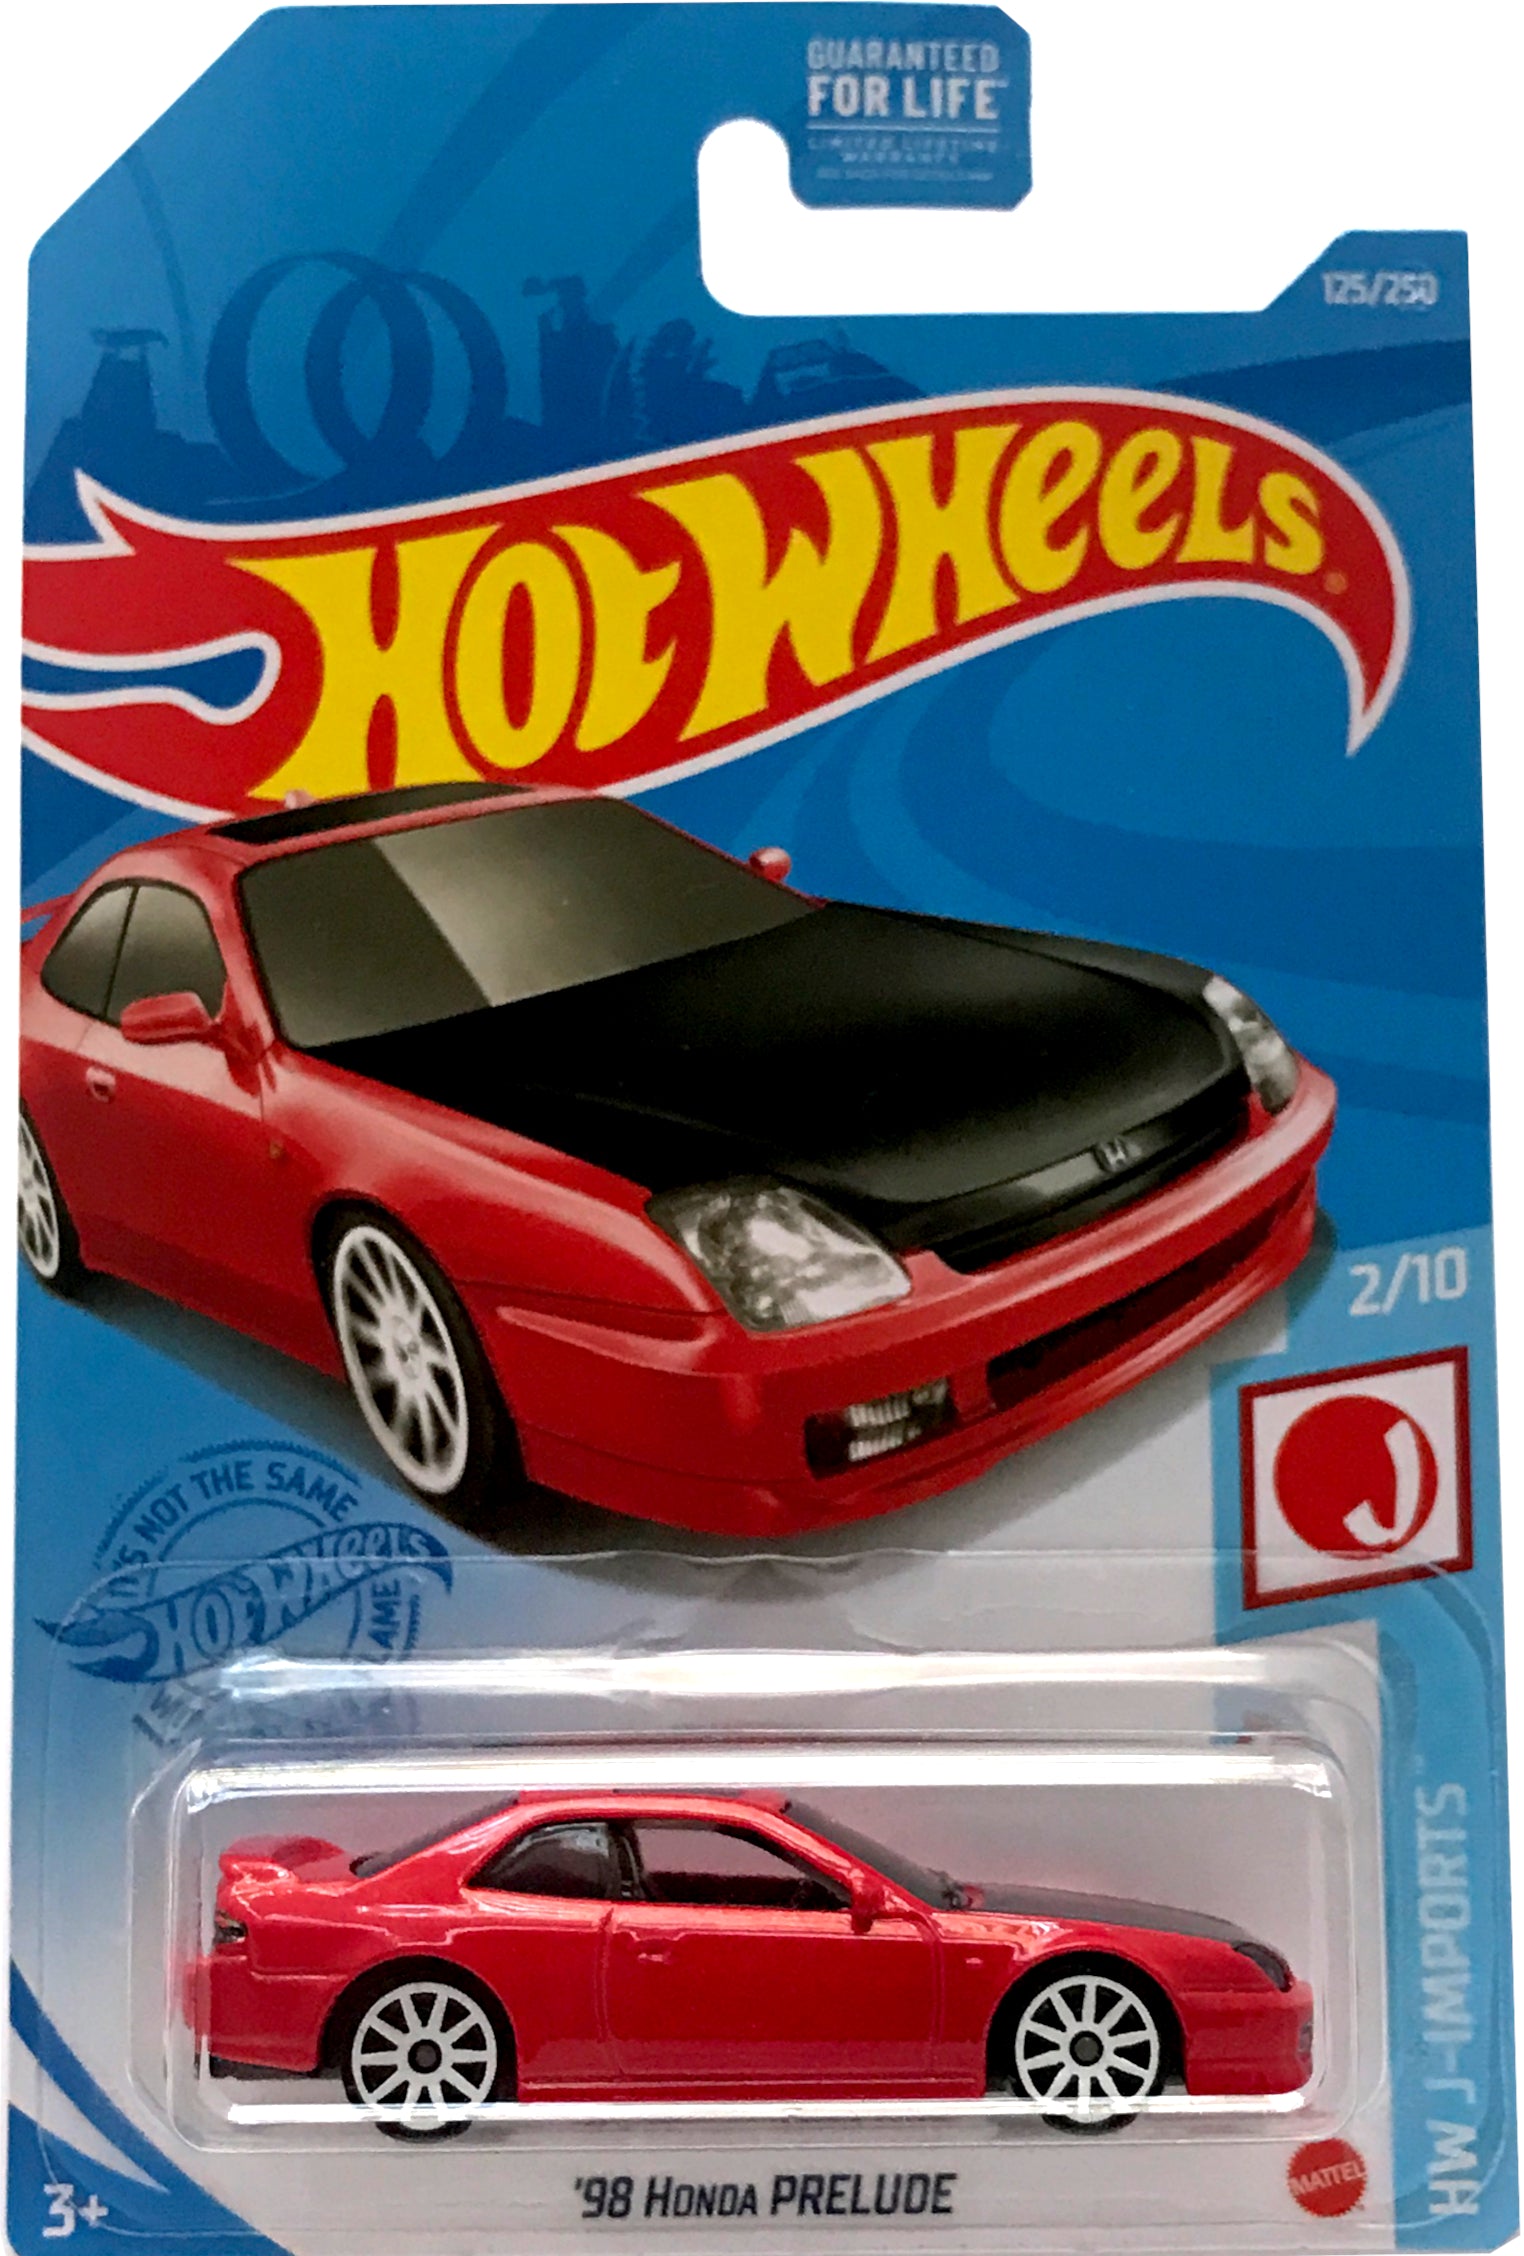 2021 Hot Wheels Mainline #125 - '98 Honda Prelude (Red) GTC08